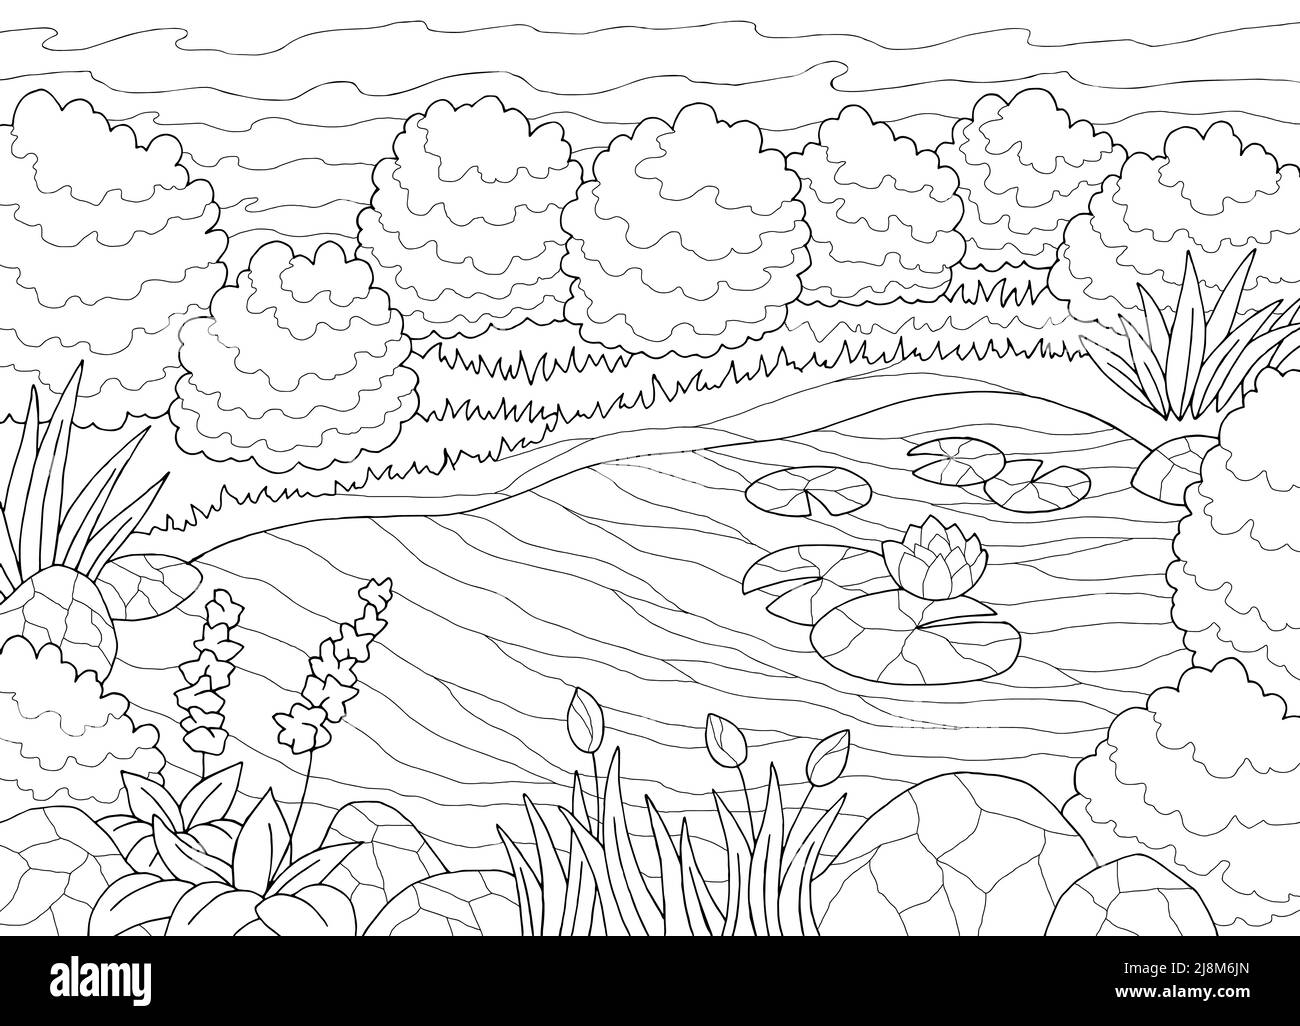 Teich Färbung Grafik schwarz weiß Landschaft Skizze Illustration Vektor Stock Vektor